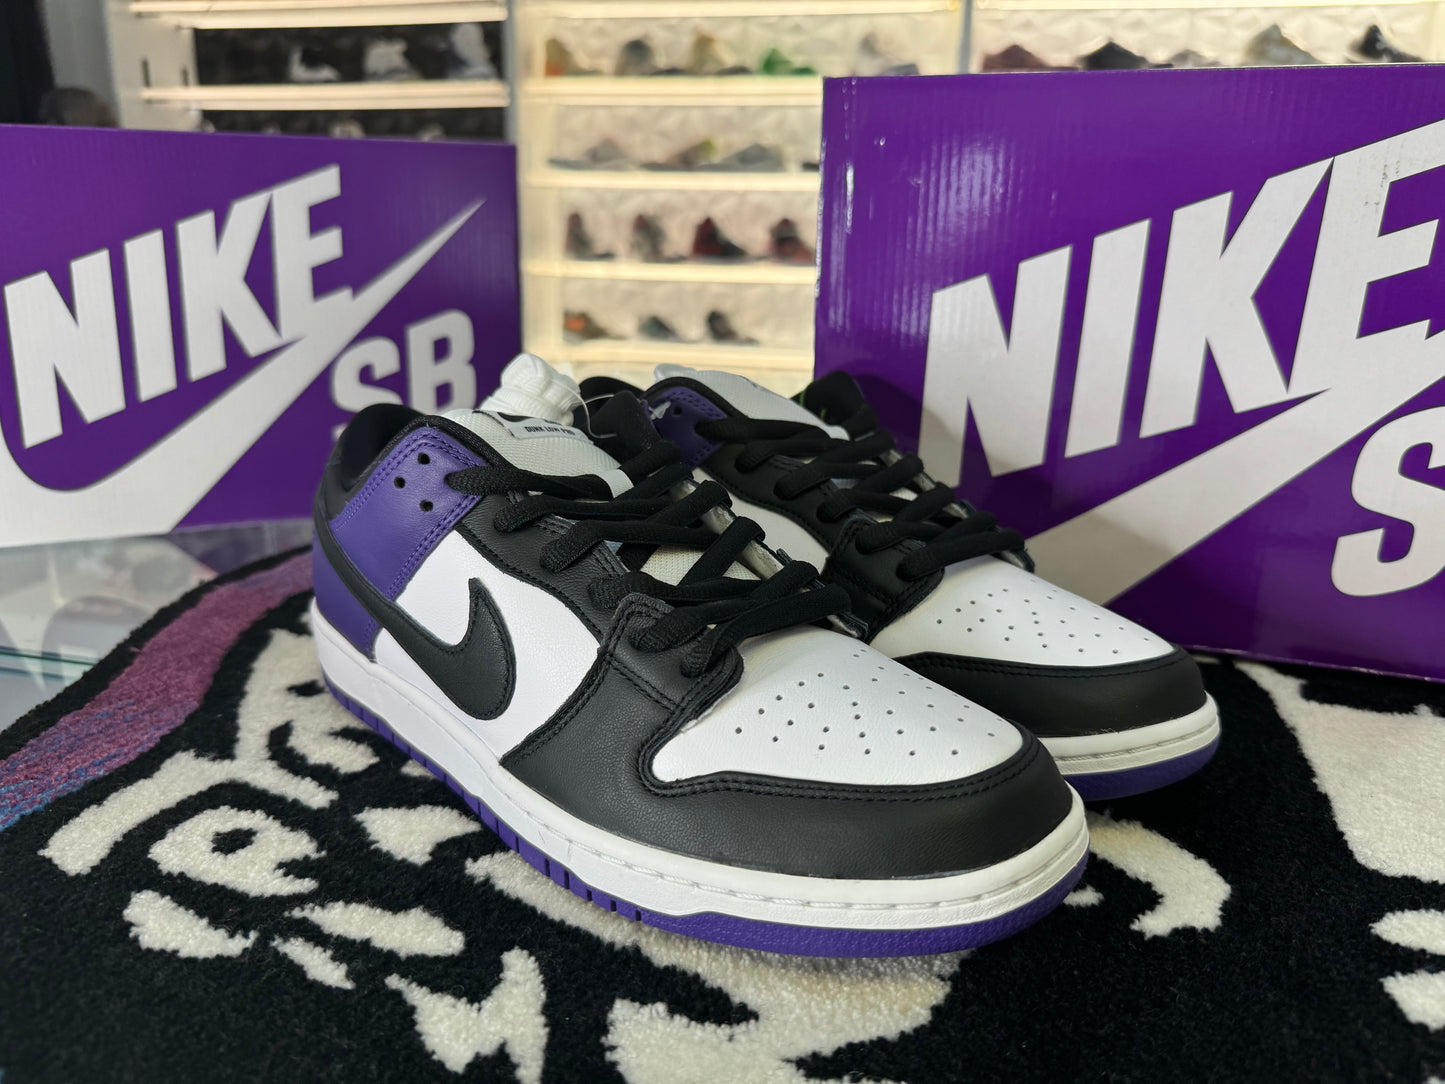 Nike Dunk SB Court Purple